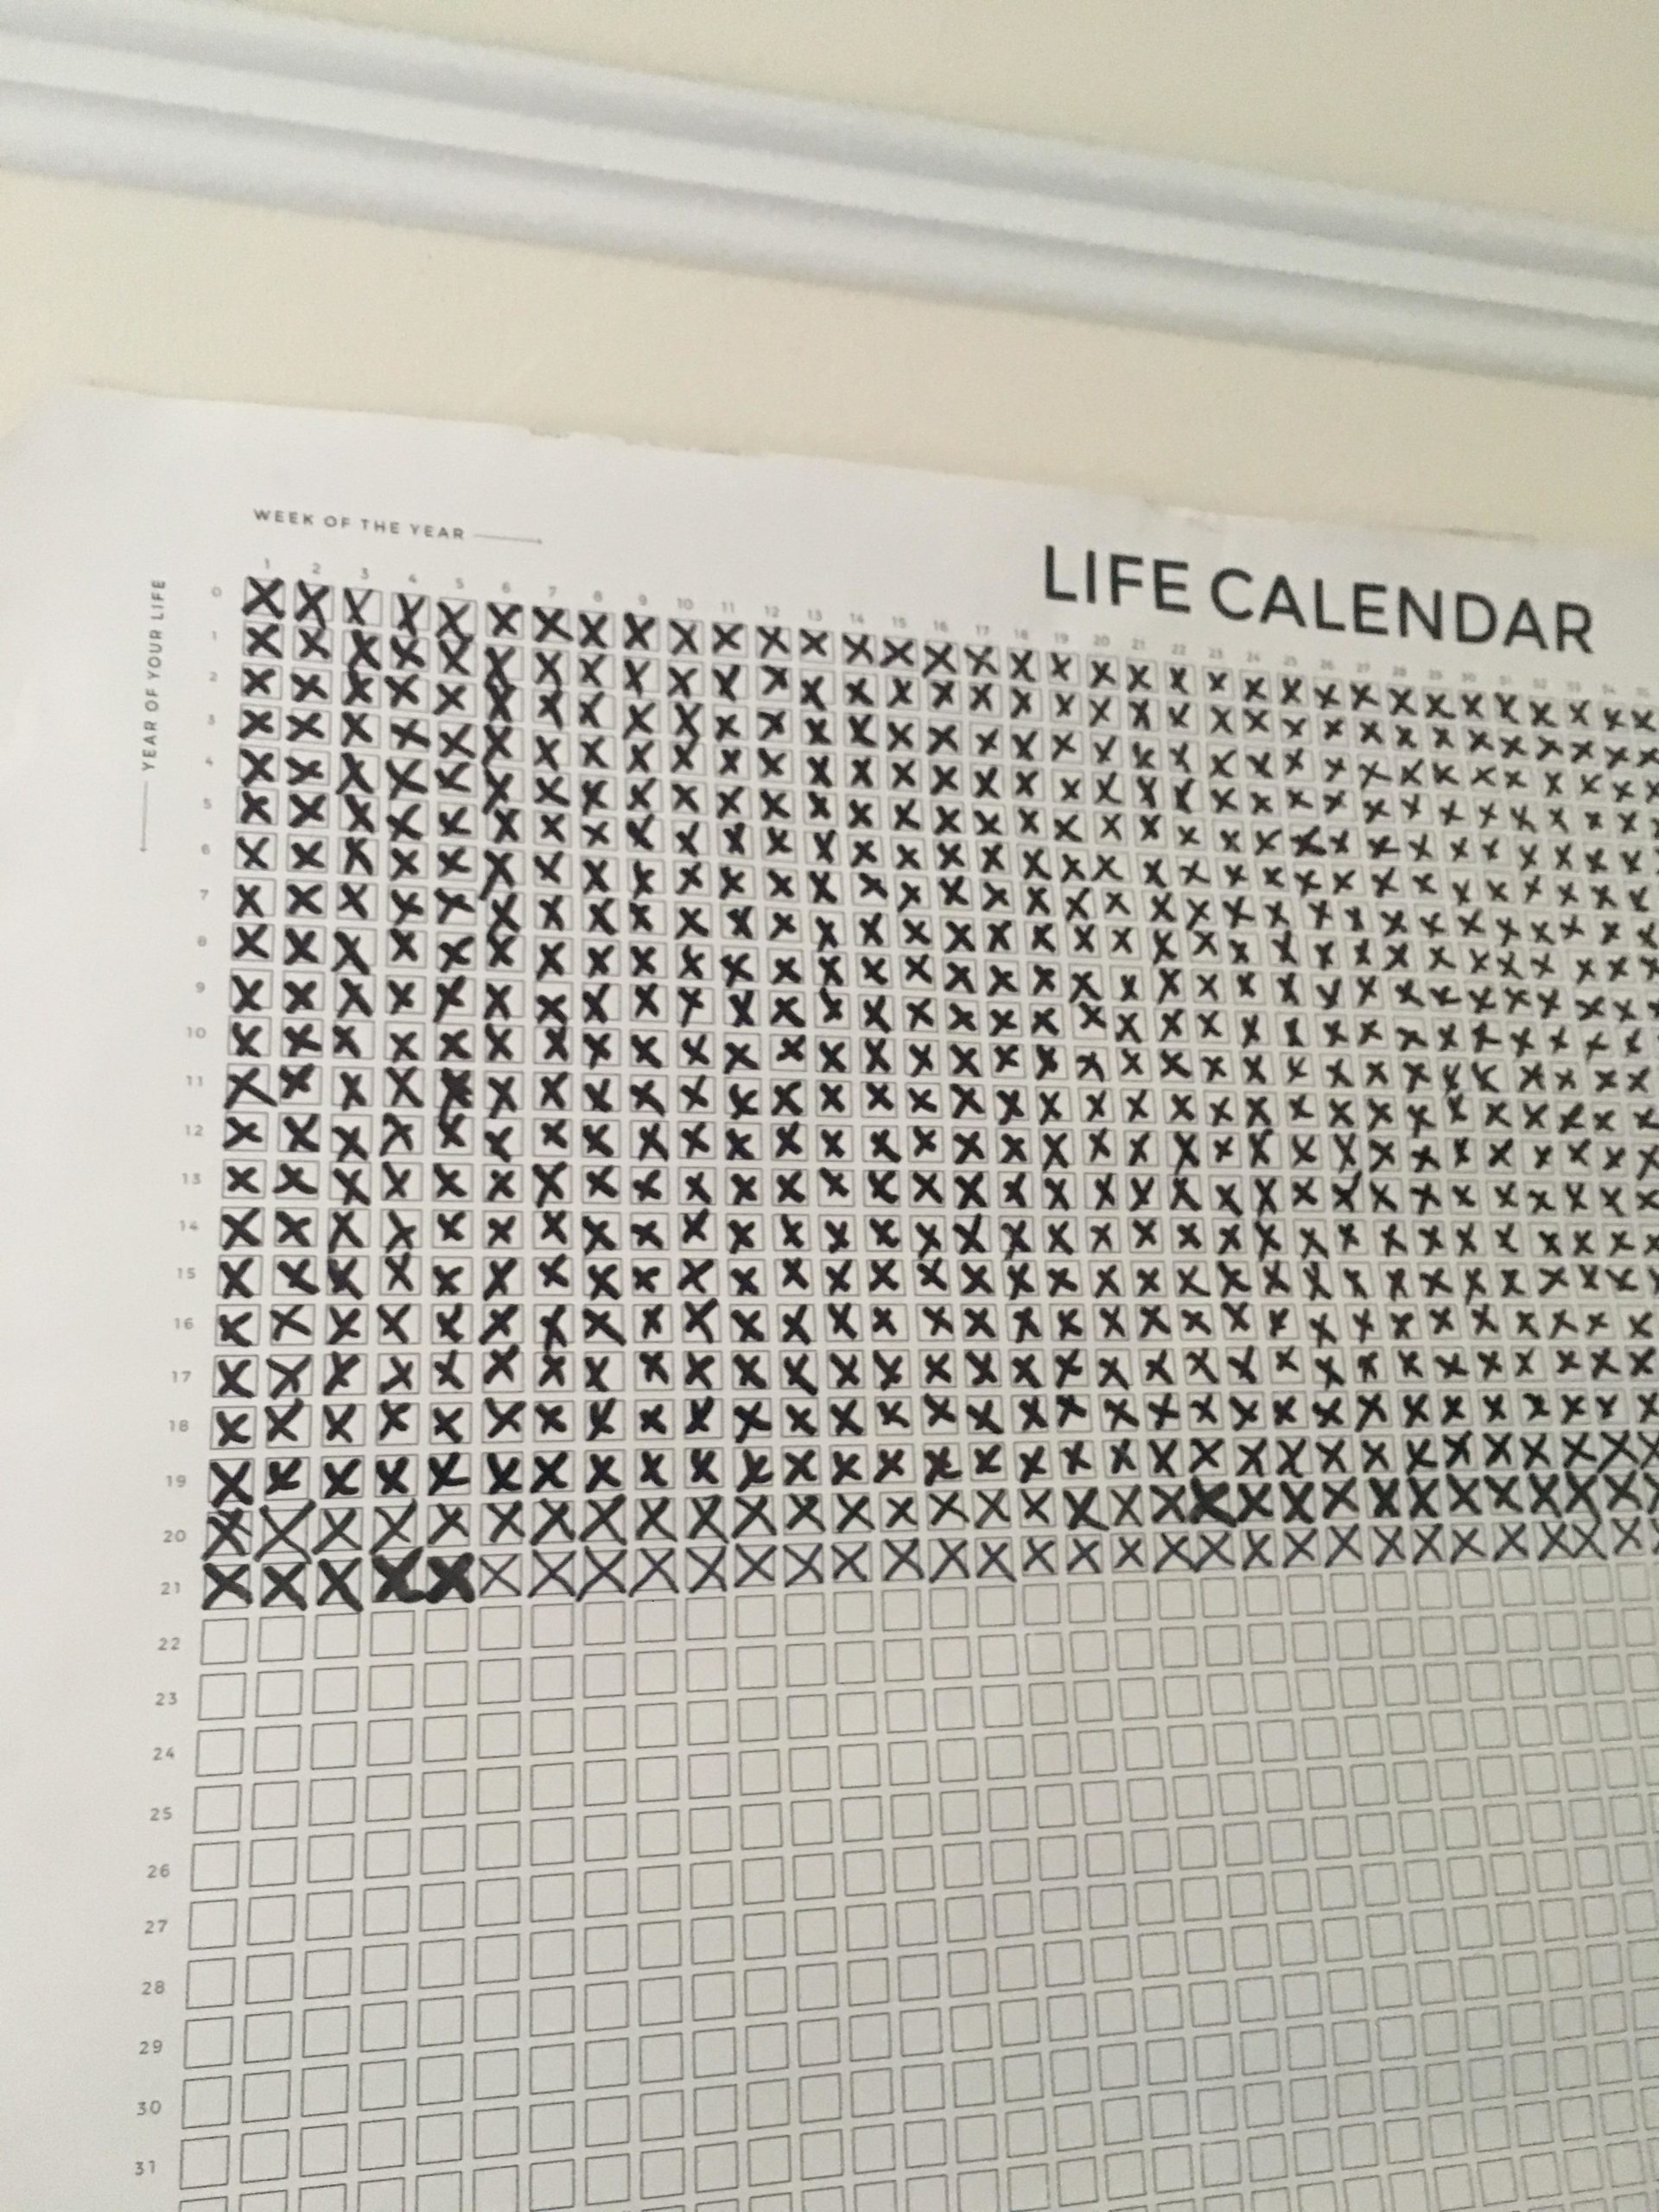 A+very+morbid+calendar.